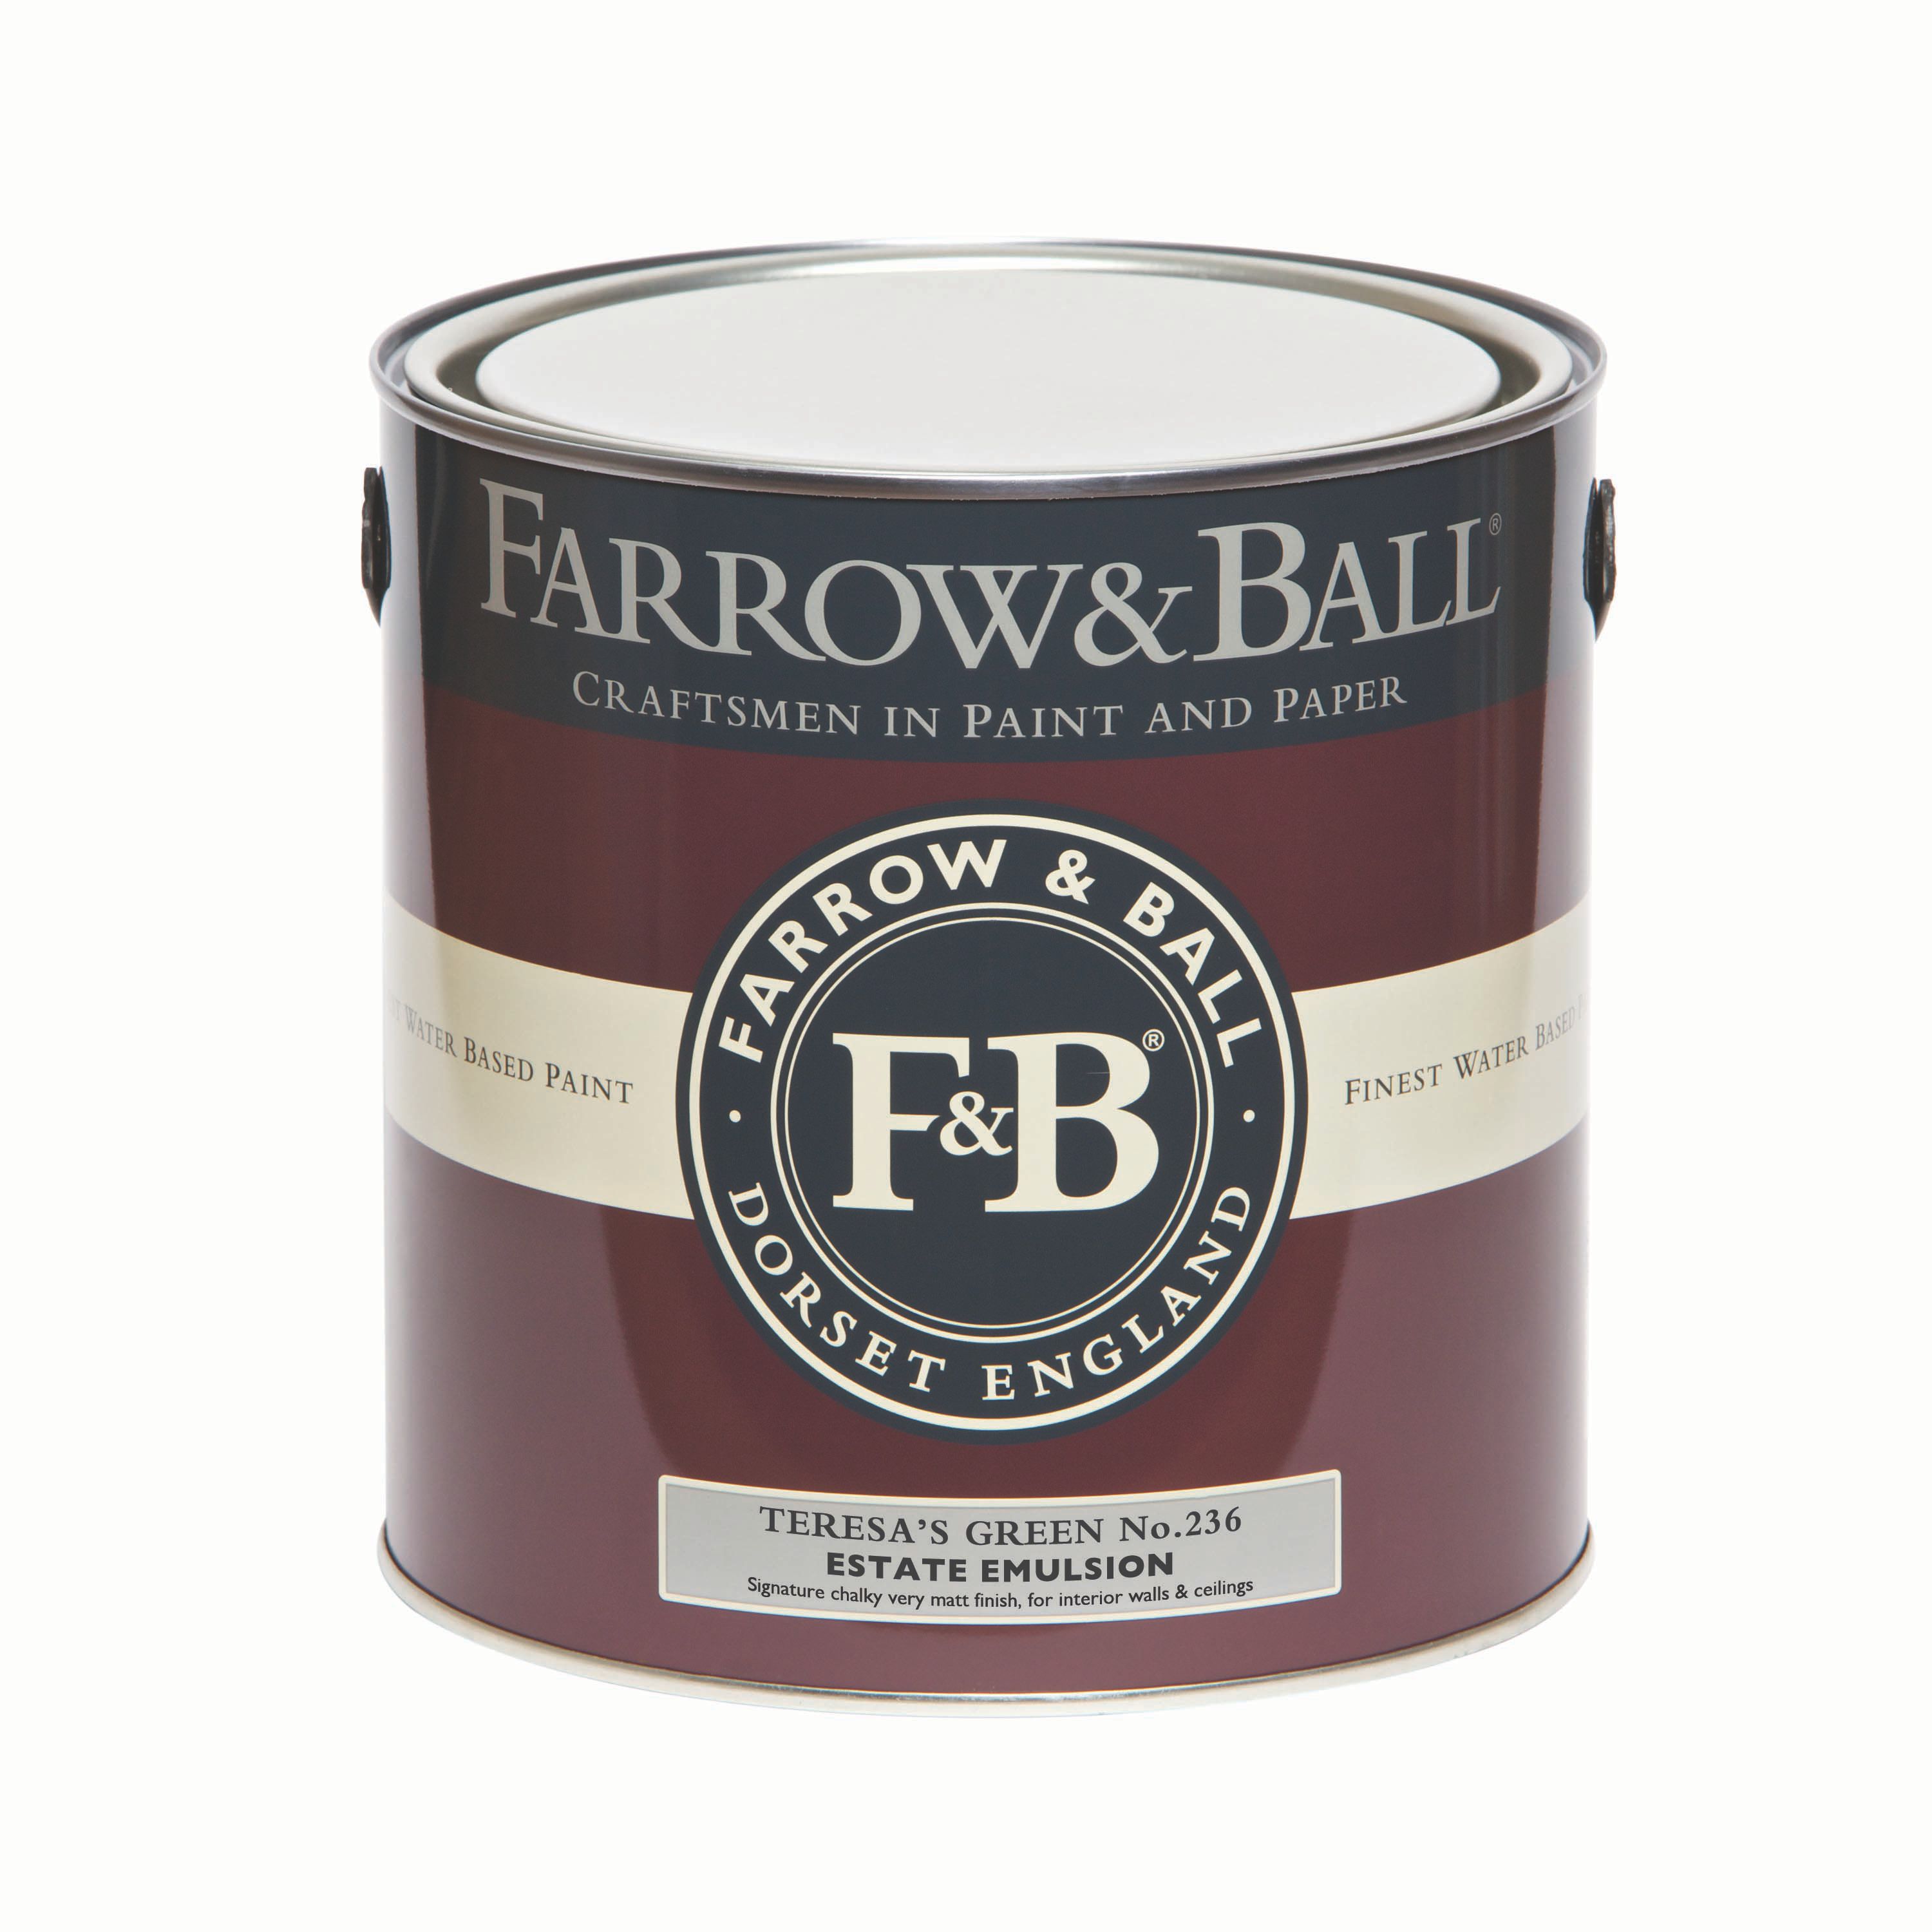 Farrow & Ball Estate Teresa's green Matt Emulsion paint, 2.5L